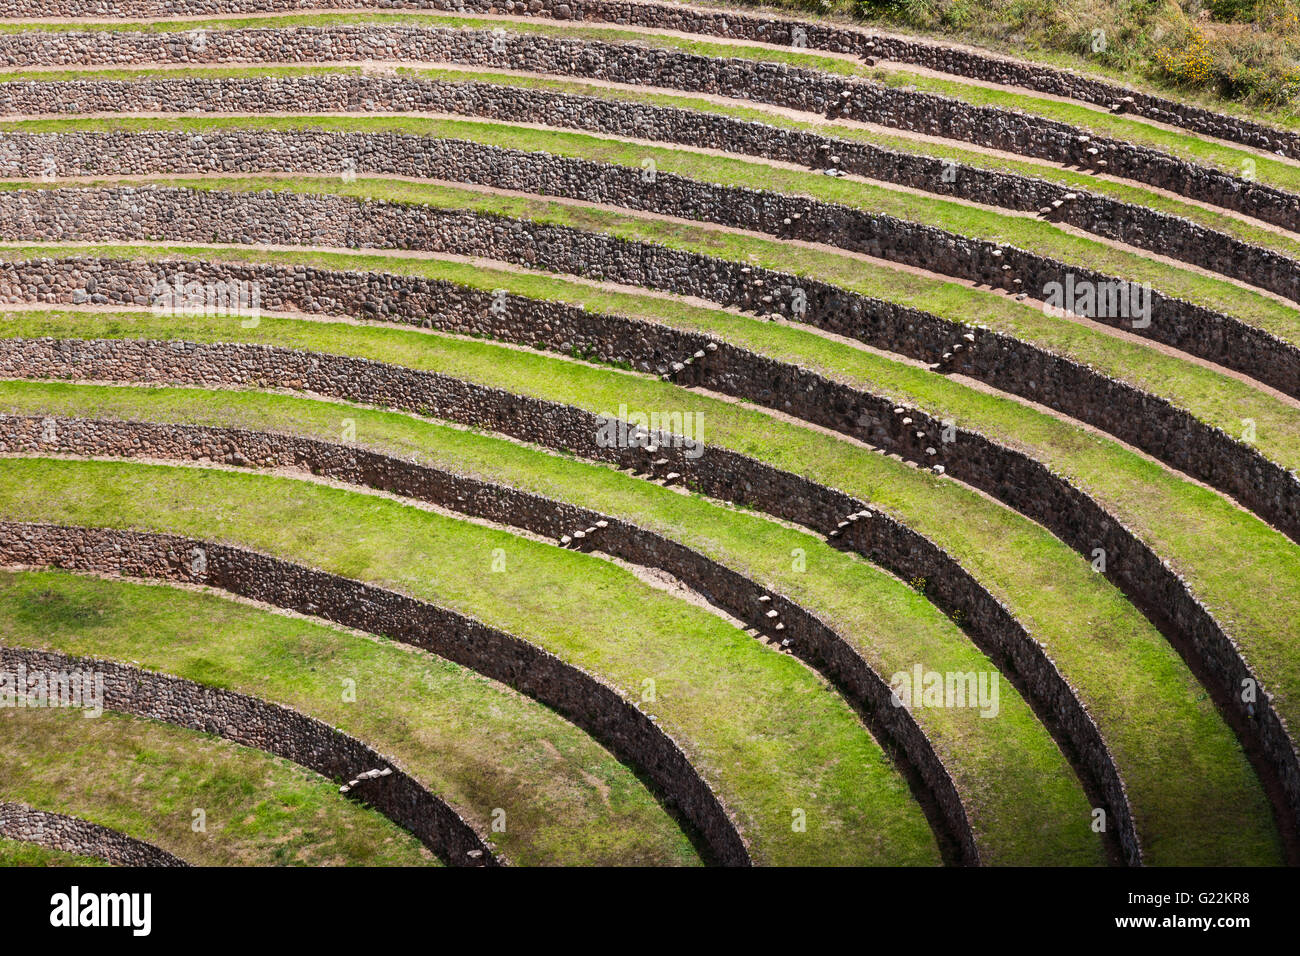 Incan agricultural terraces at Moray, Peru Stock Photo